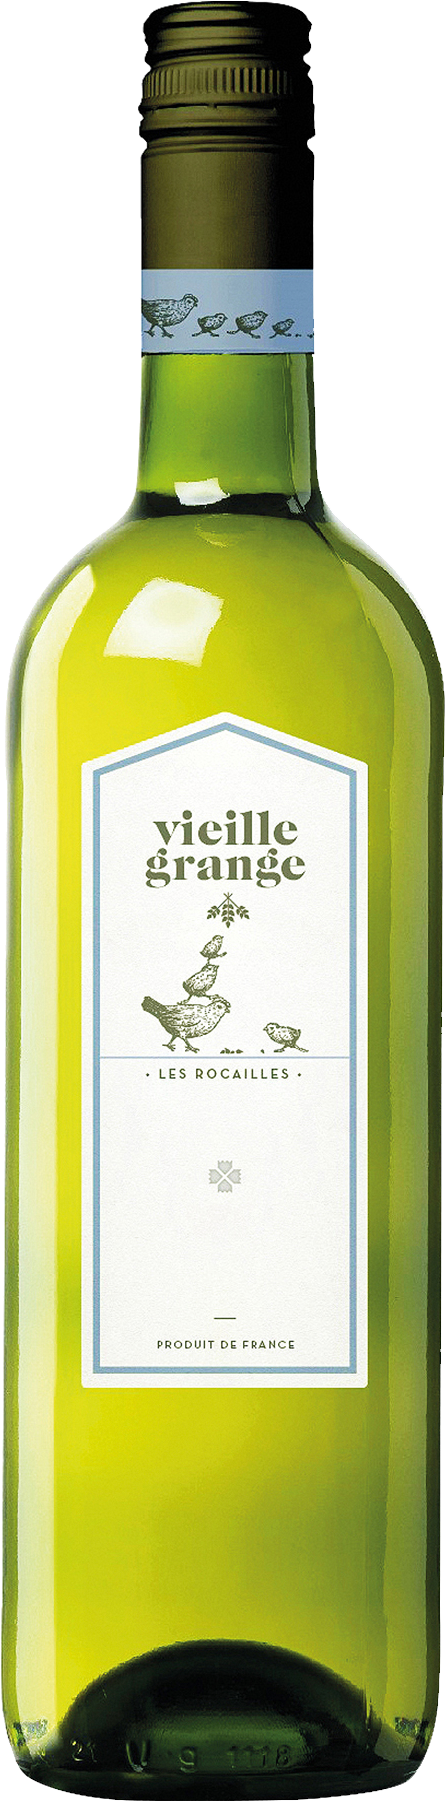 Calmel Joseph - Vieille Grange Blanc - Les Fines Roches Chardonnay IGP Oc